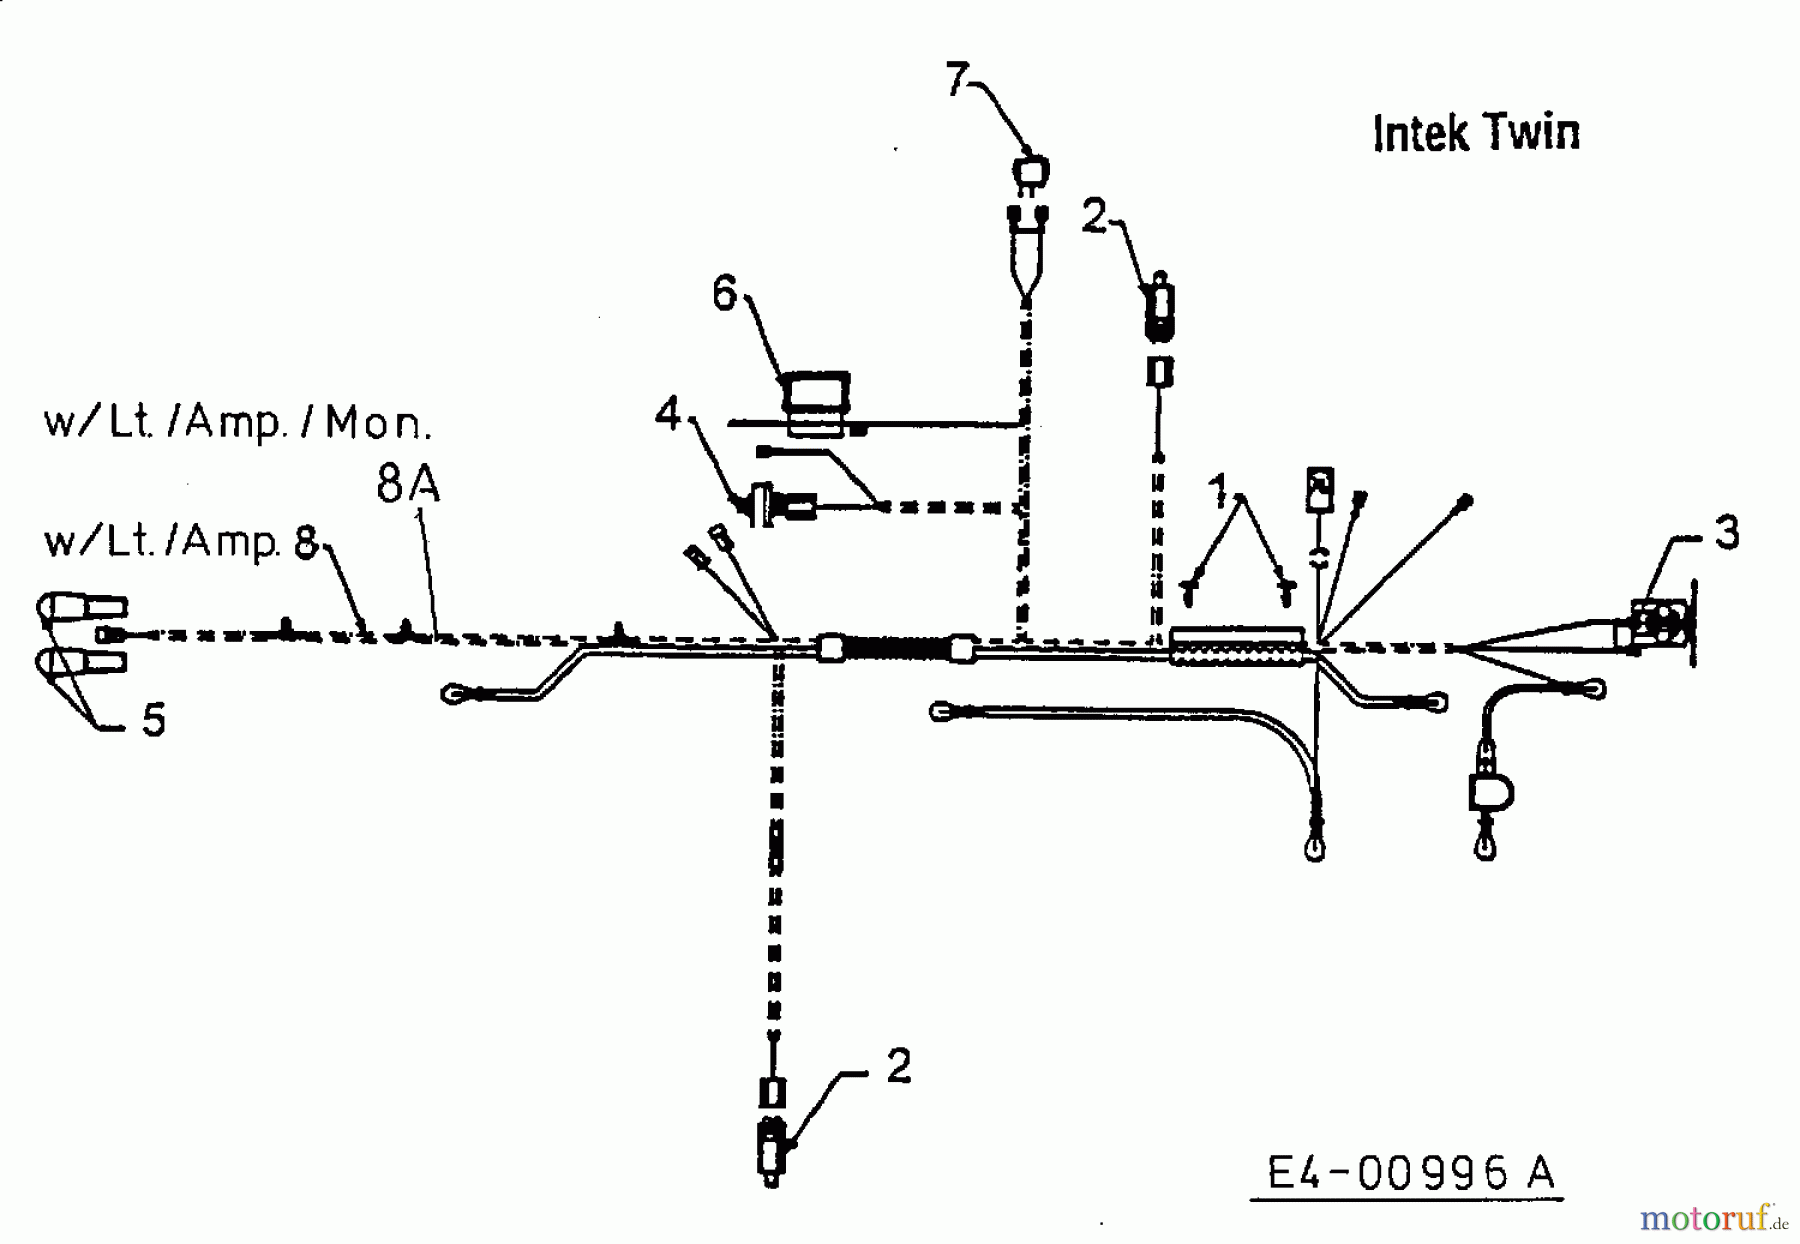  MTD Lawn tractors H/165 13AO698G678  (1999) Wiring diagram Intek Twin